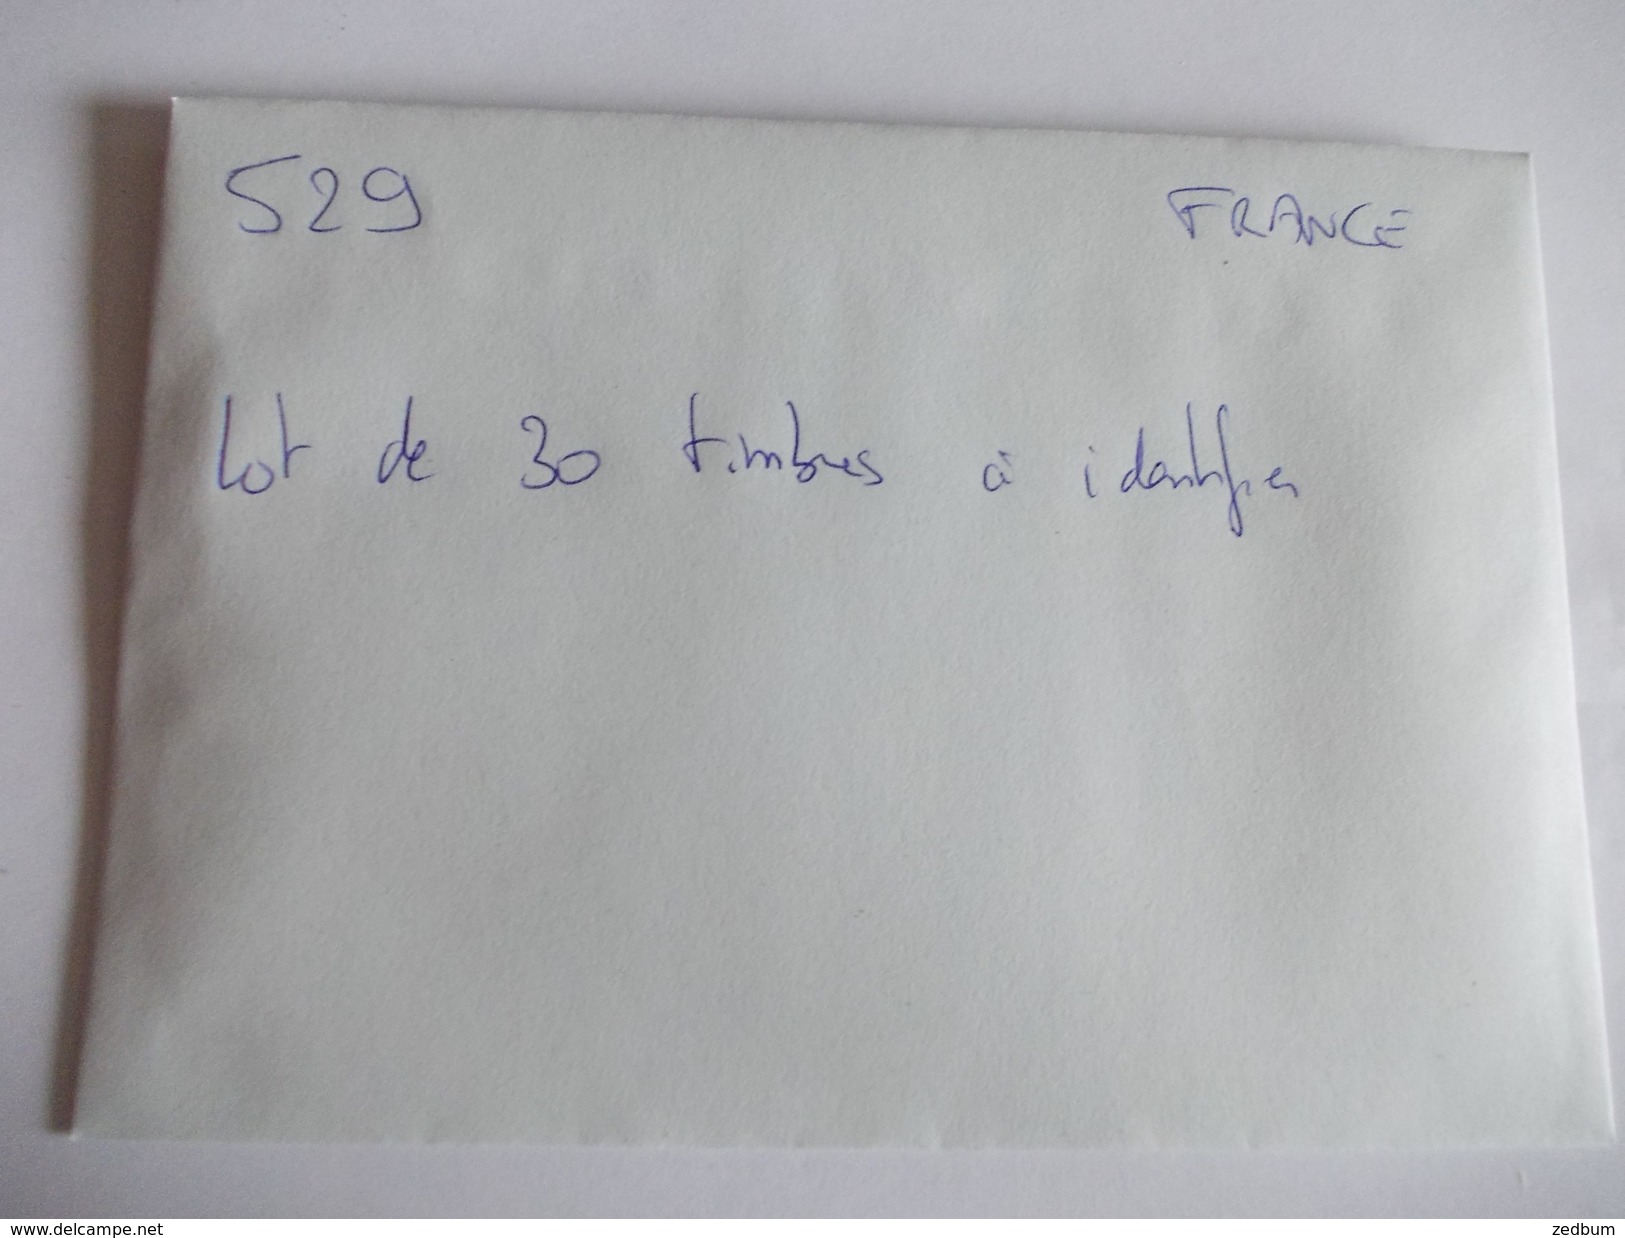 TIMBRE France Lot De 30 Timbres à Identifier N° 529 - Lots & Kiloware (max. 999 Stück)